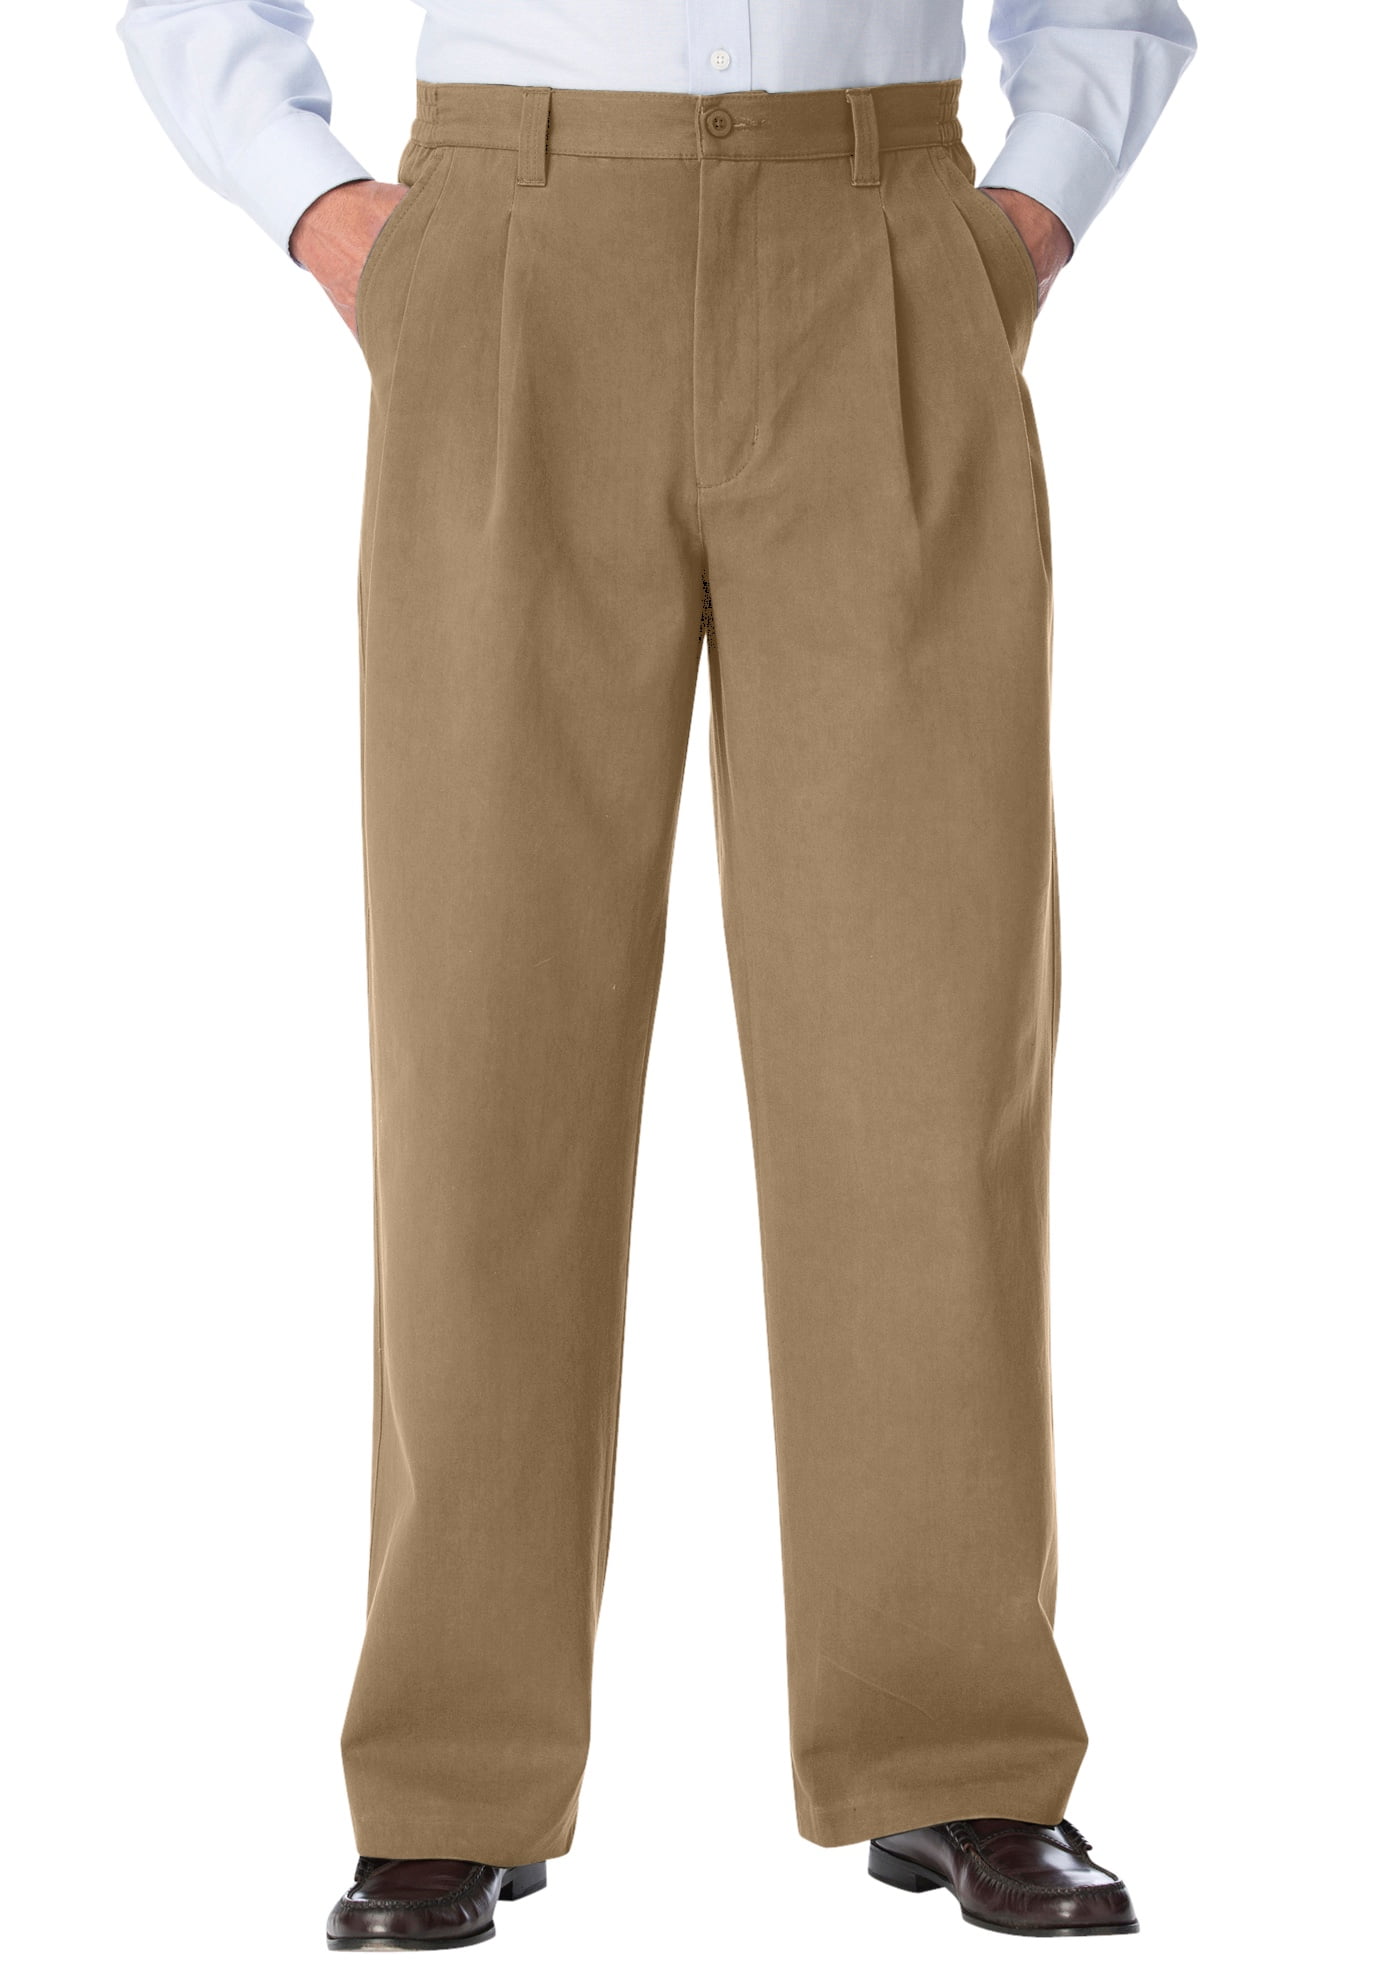 KingSize Mens Big & Tall Wrinkle-Free Expandable Waist Pleat Front Shorts 